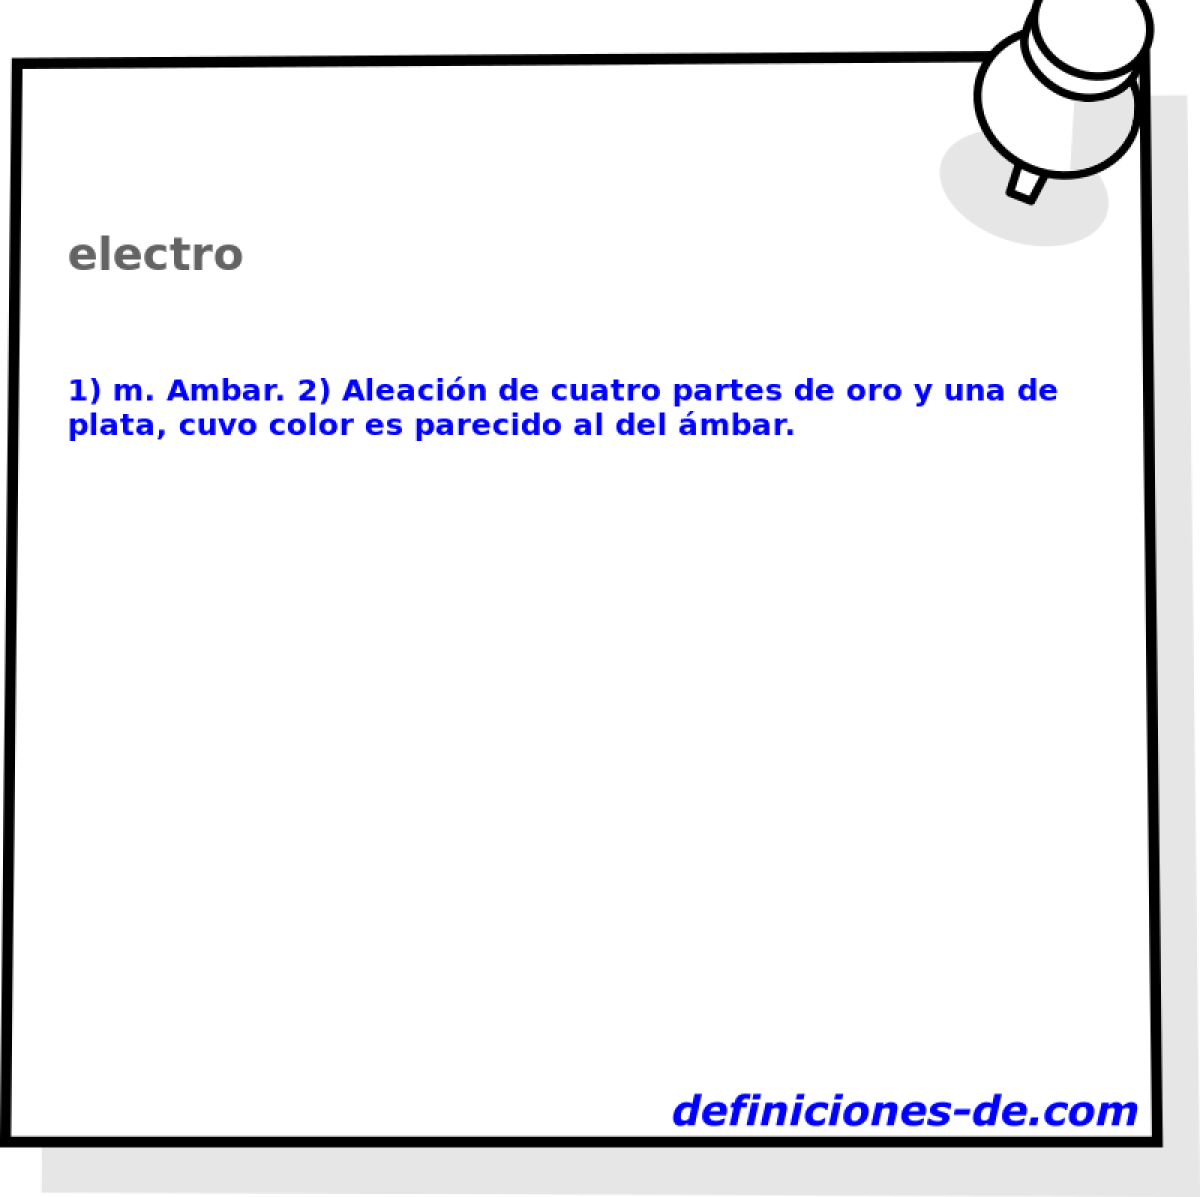 electro 